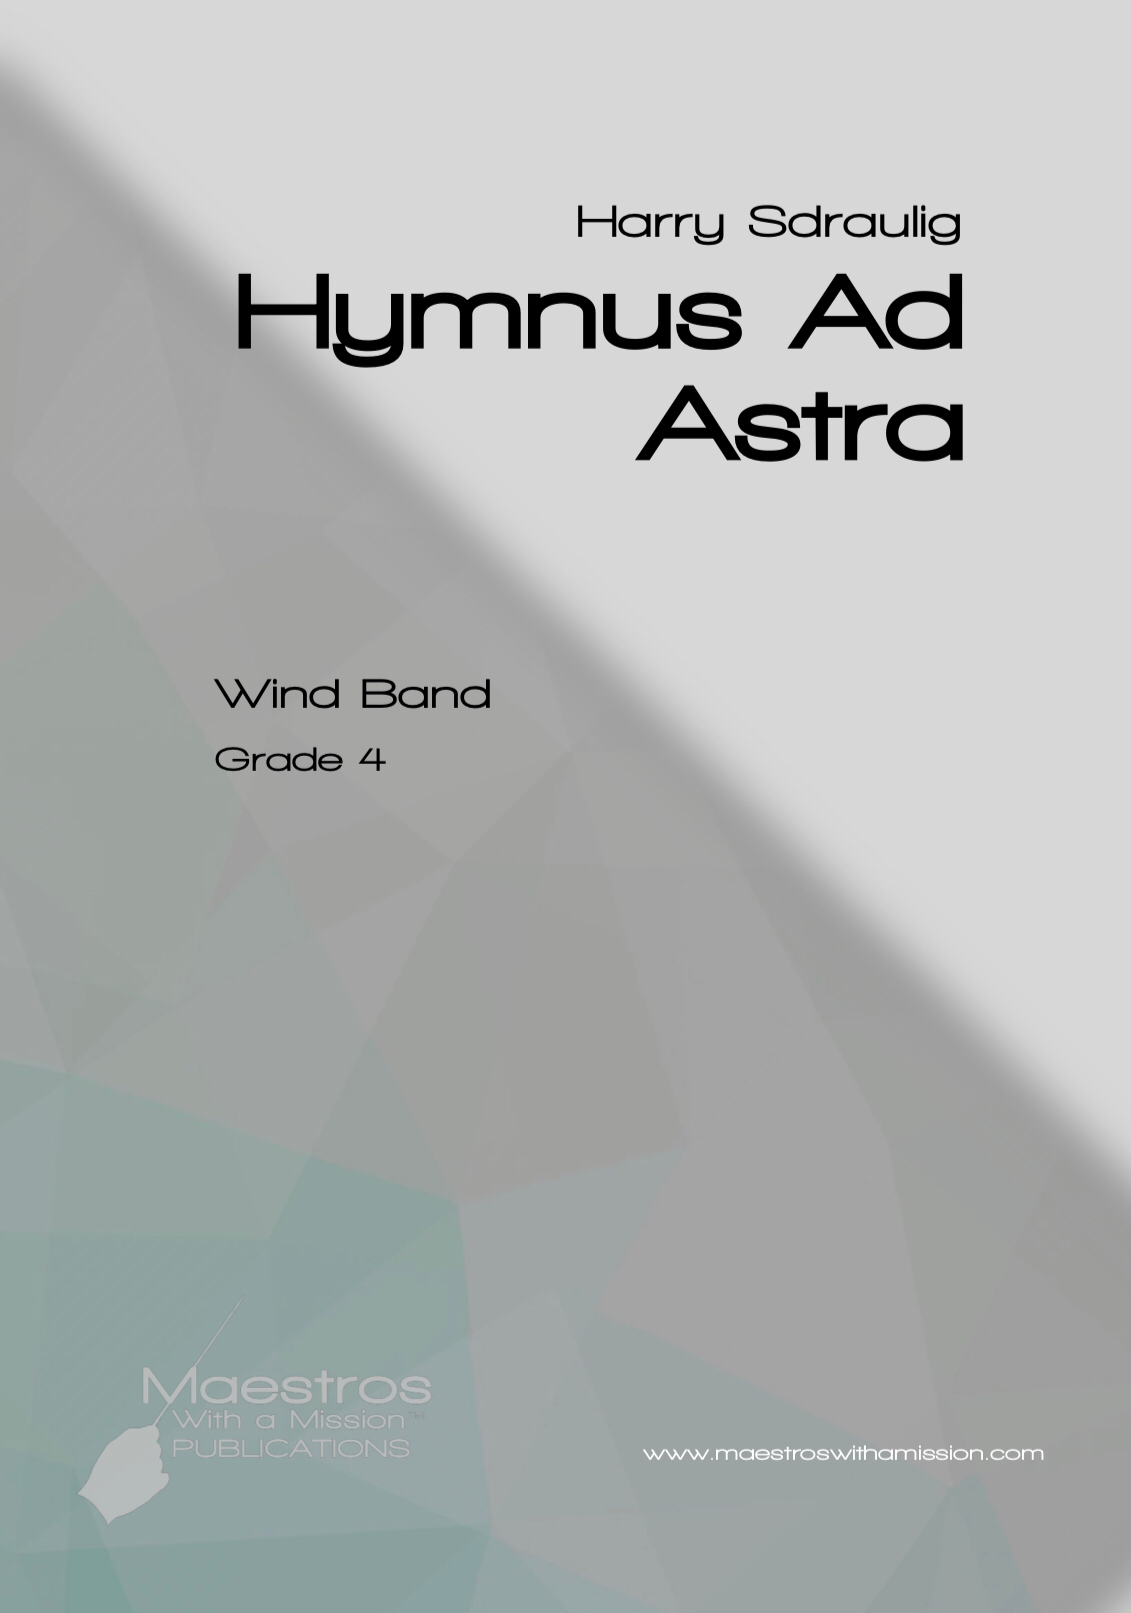 Hymnus Ad Astra by Harry Sdraulig